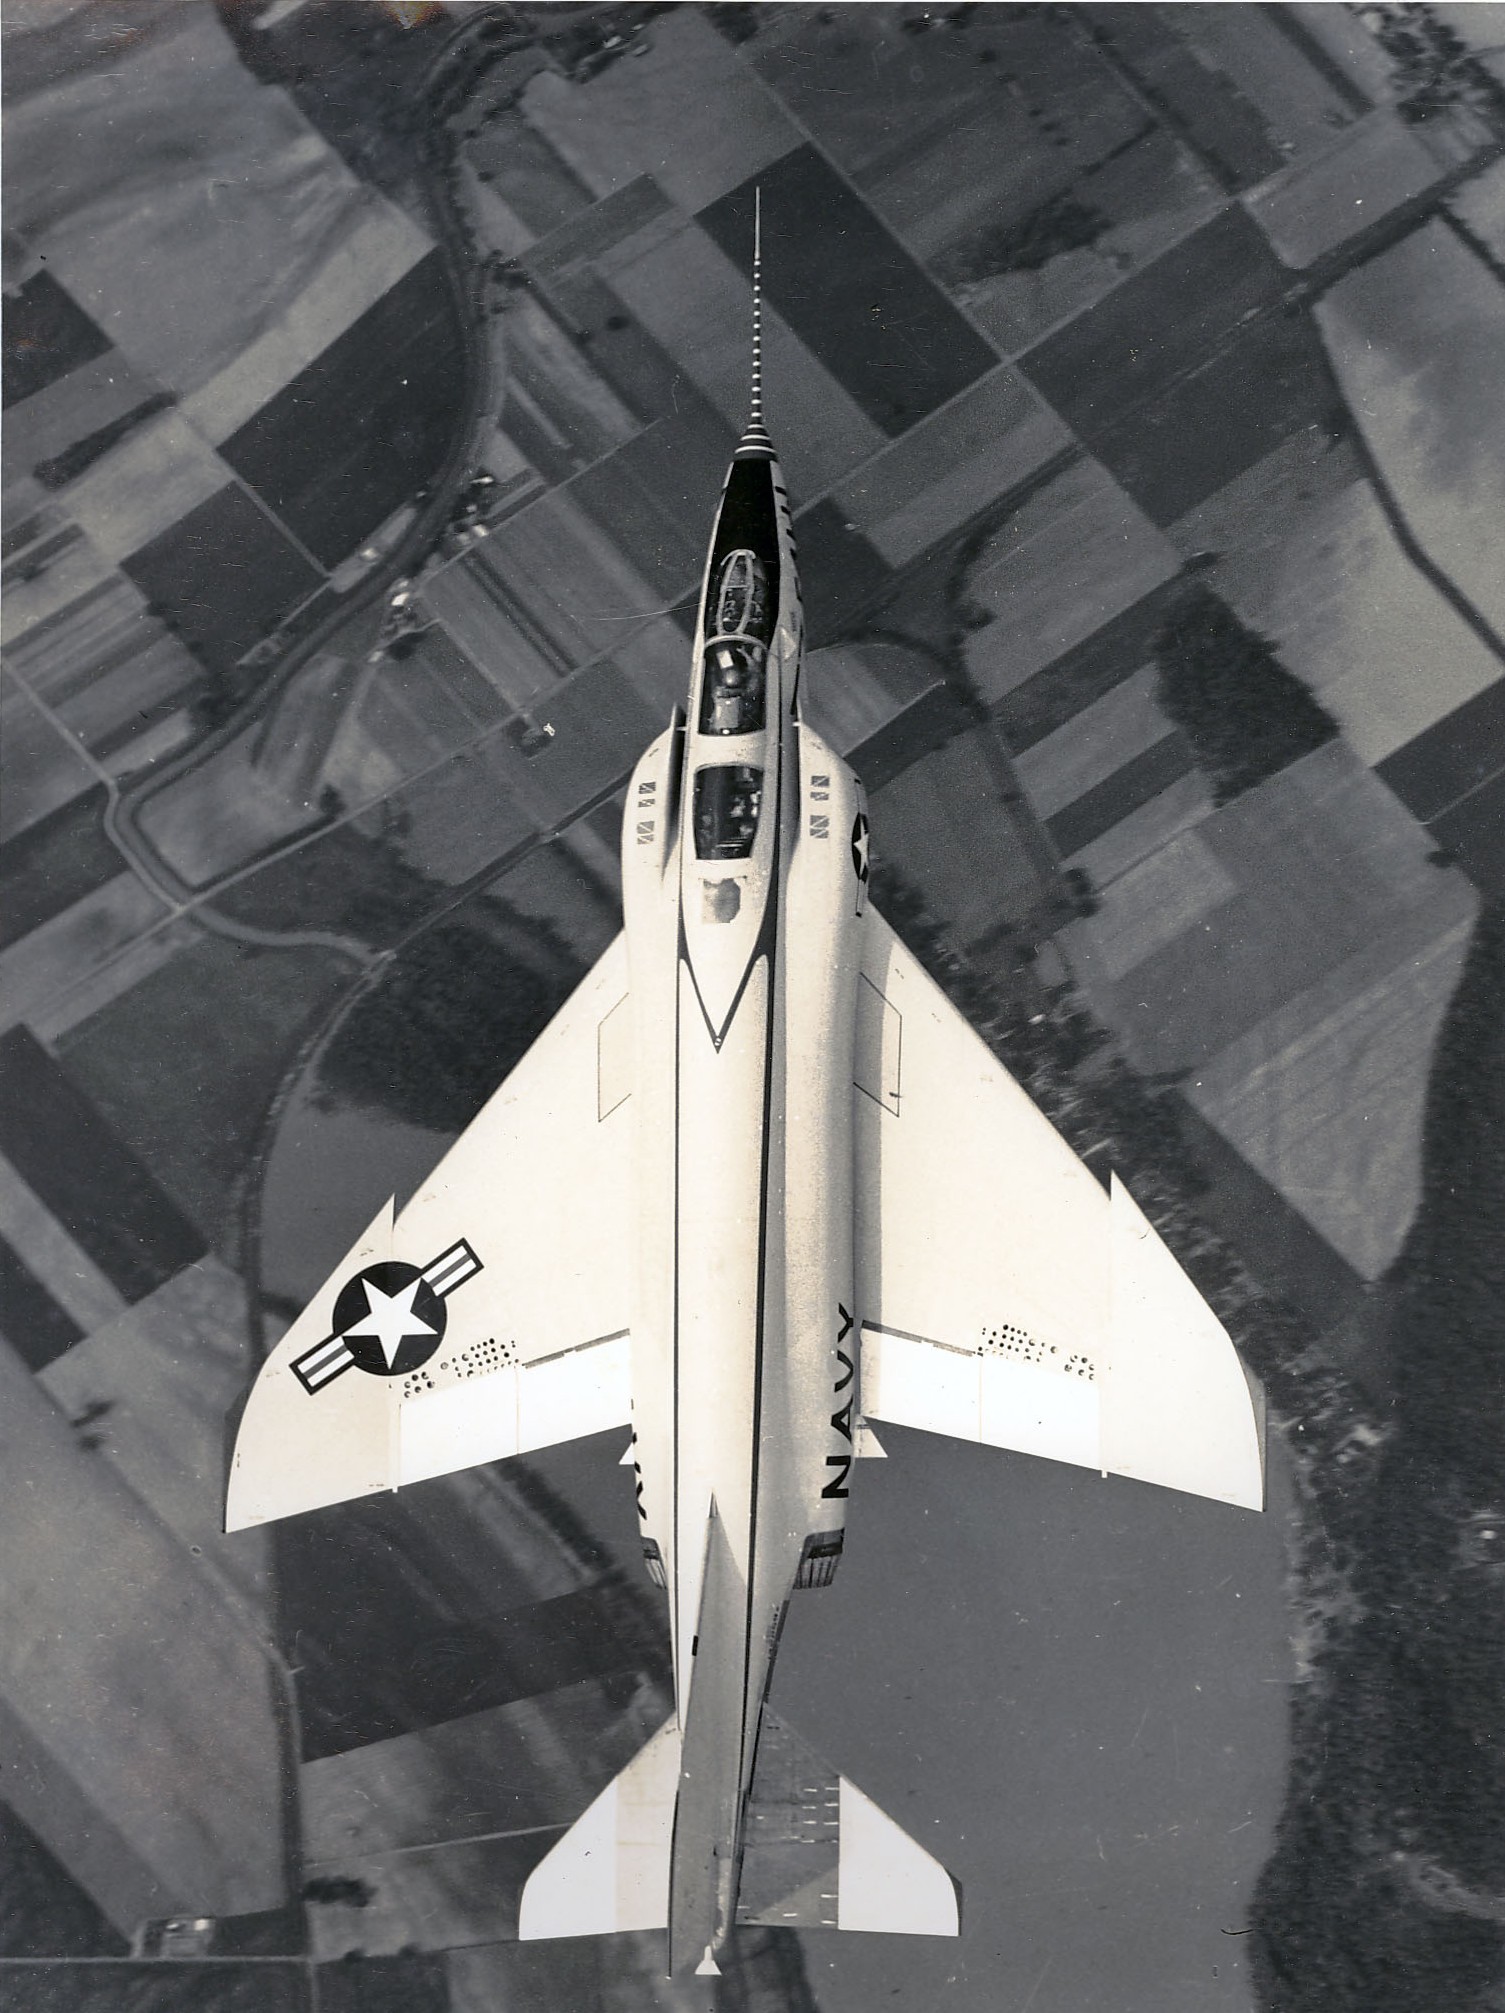 McDonnell-YF4H-1-Phantom-II-Bu.-No.-142259-seen-from-above-1958.jpg